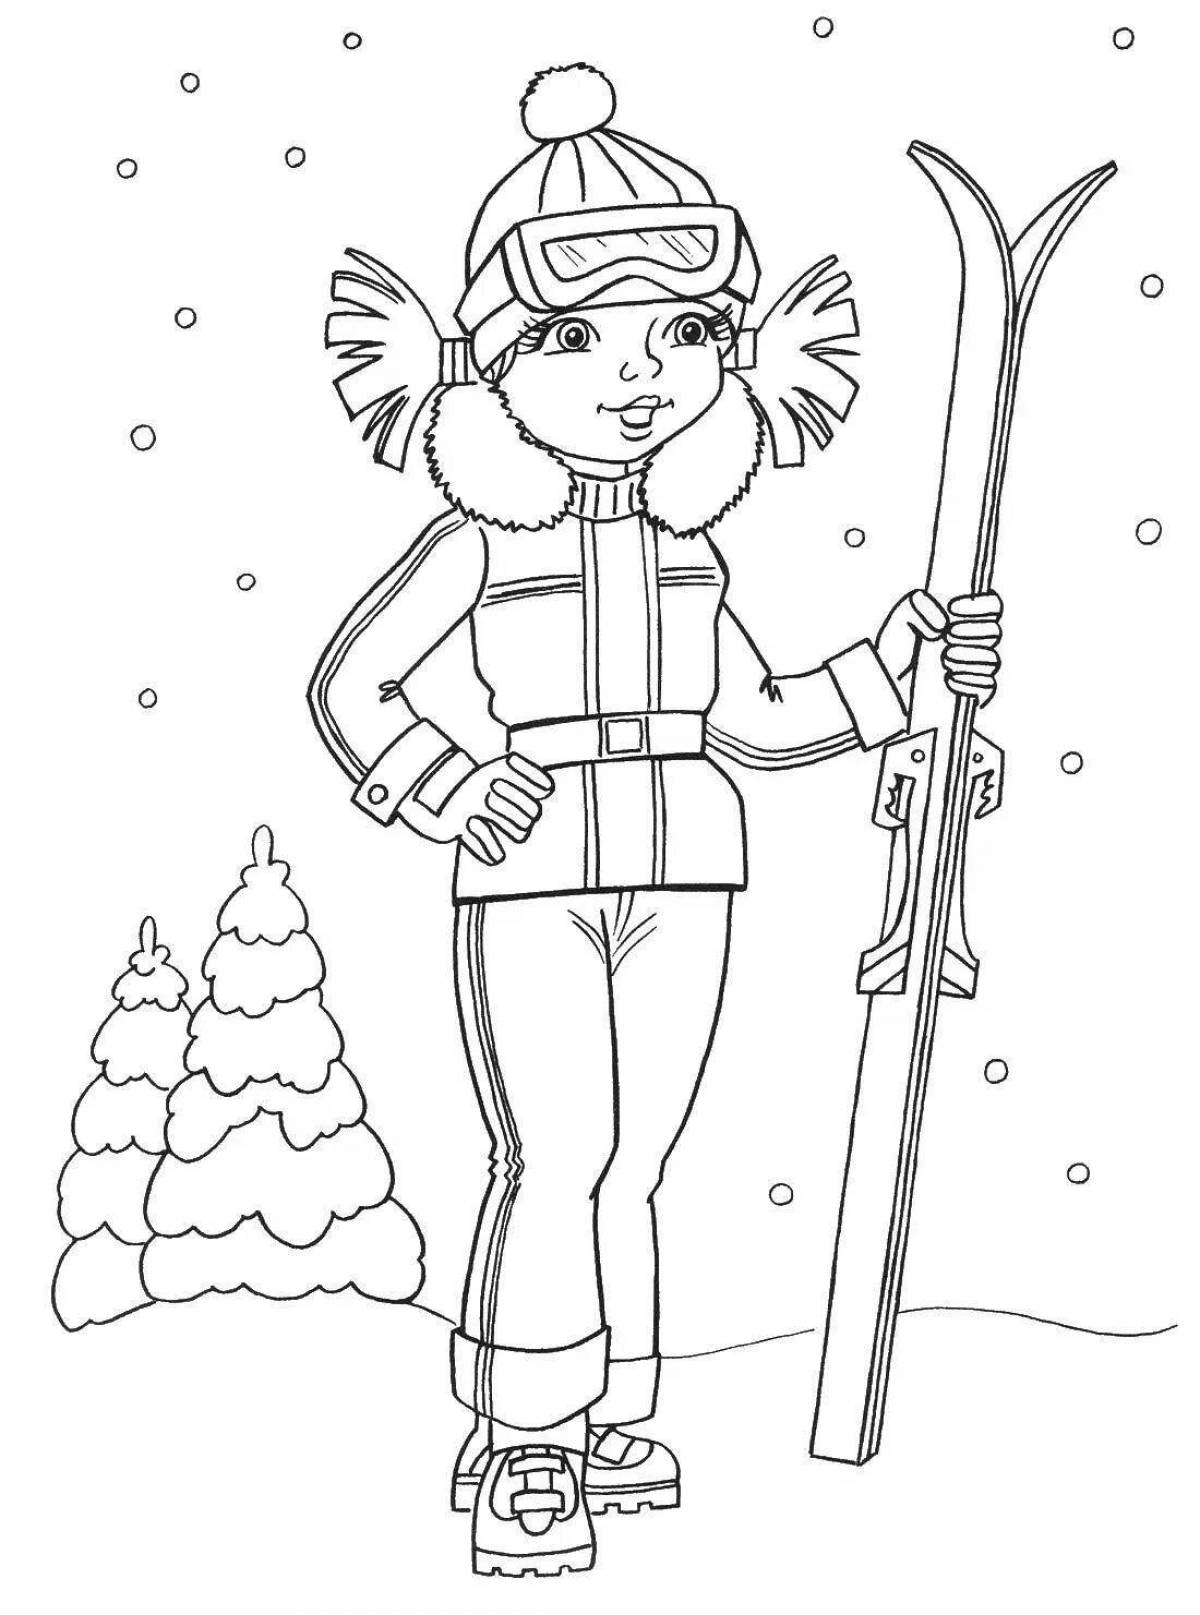 Skier for children 5 6 years old #4